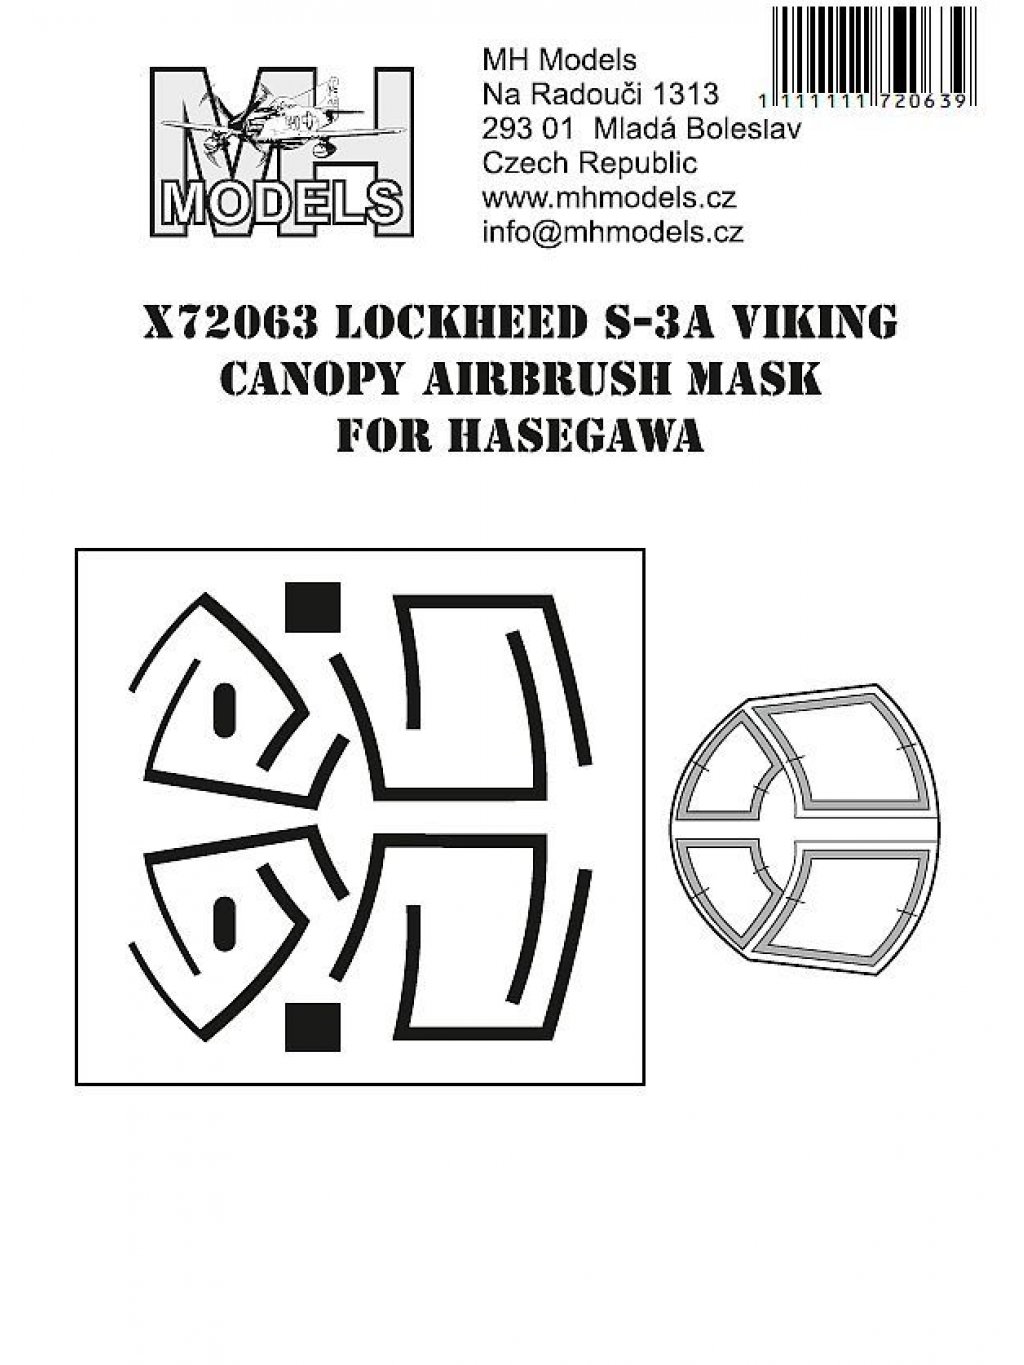 Lockheed S-3A Viking canopy airbrush mask for Hasegawa